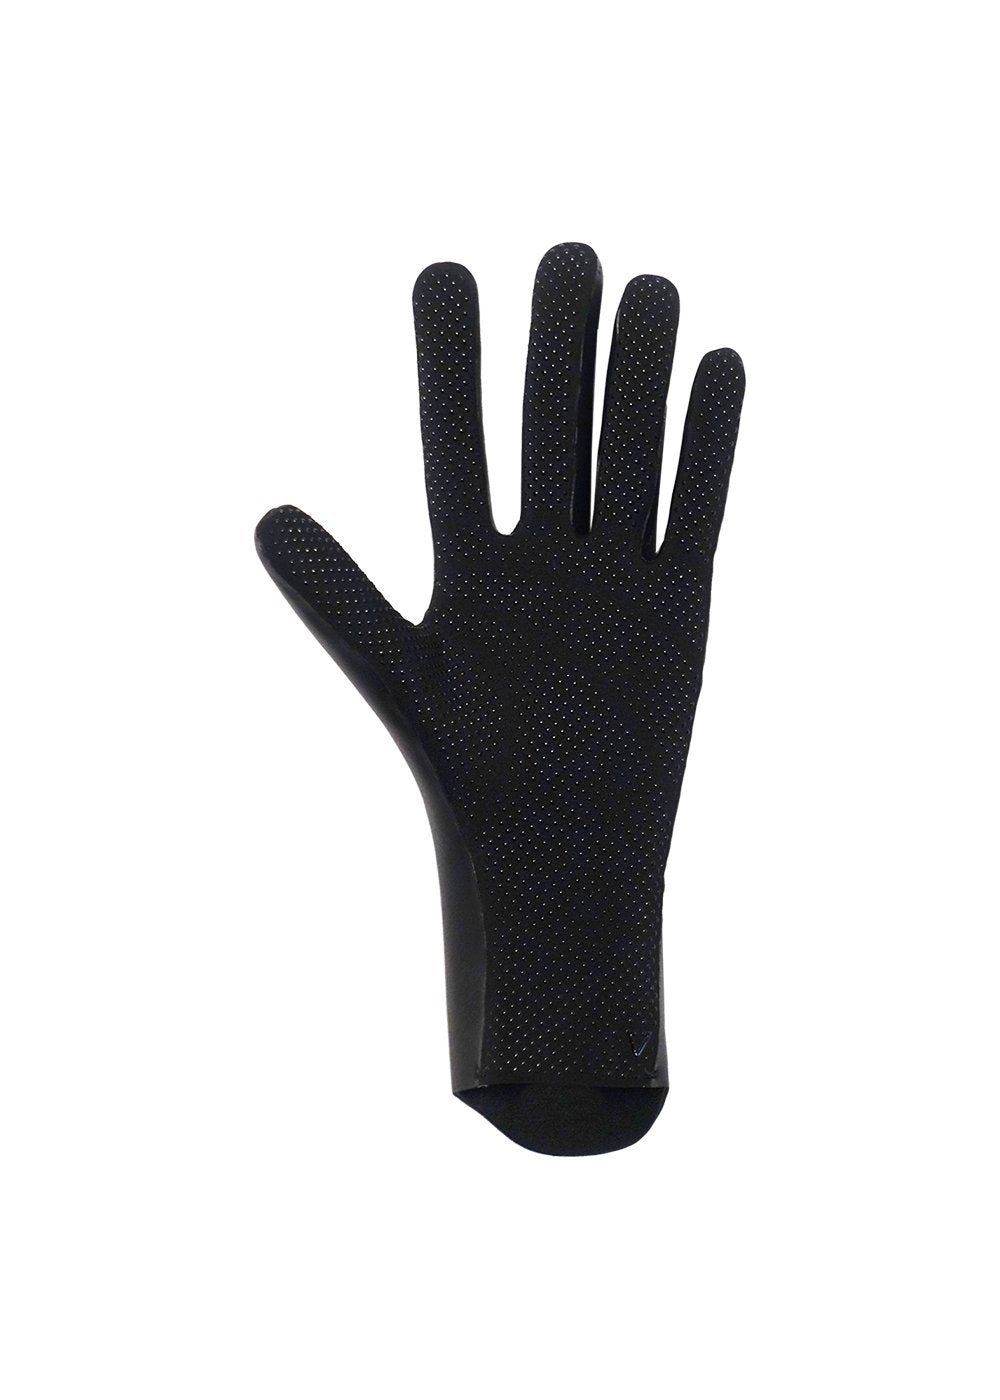 Vissla Black High Seas 1.5mm Wetsuit Gloves. Bottom View.